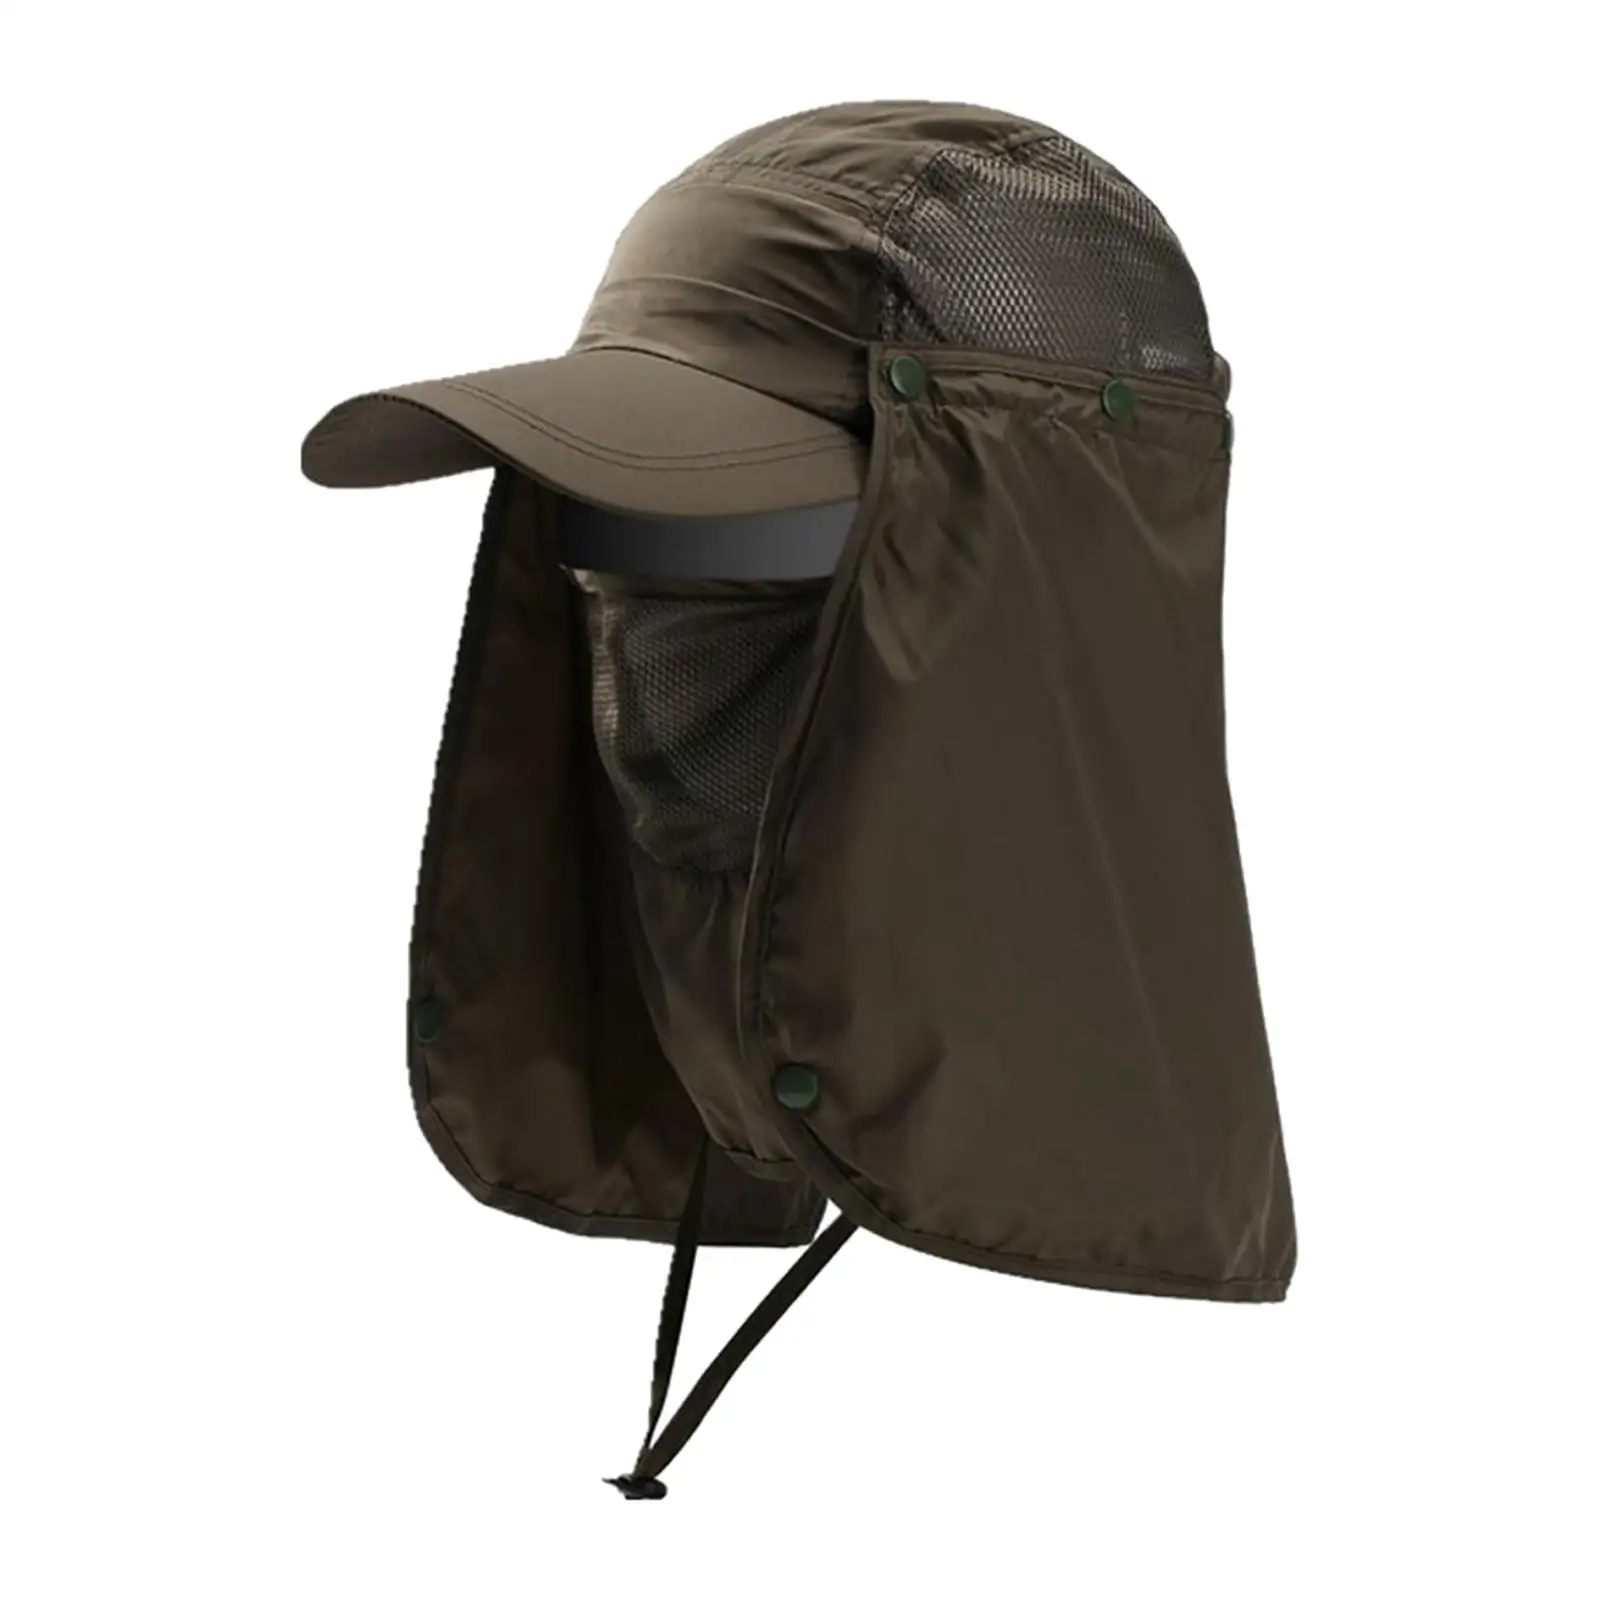 Outdoor Hiking Hat with Neck Flap Baseball Cap, Sun Cap for Camping Climbing Fishing